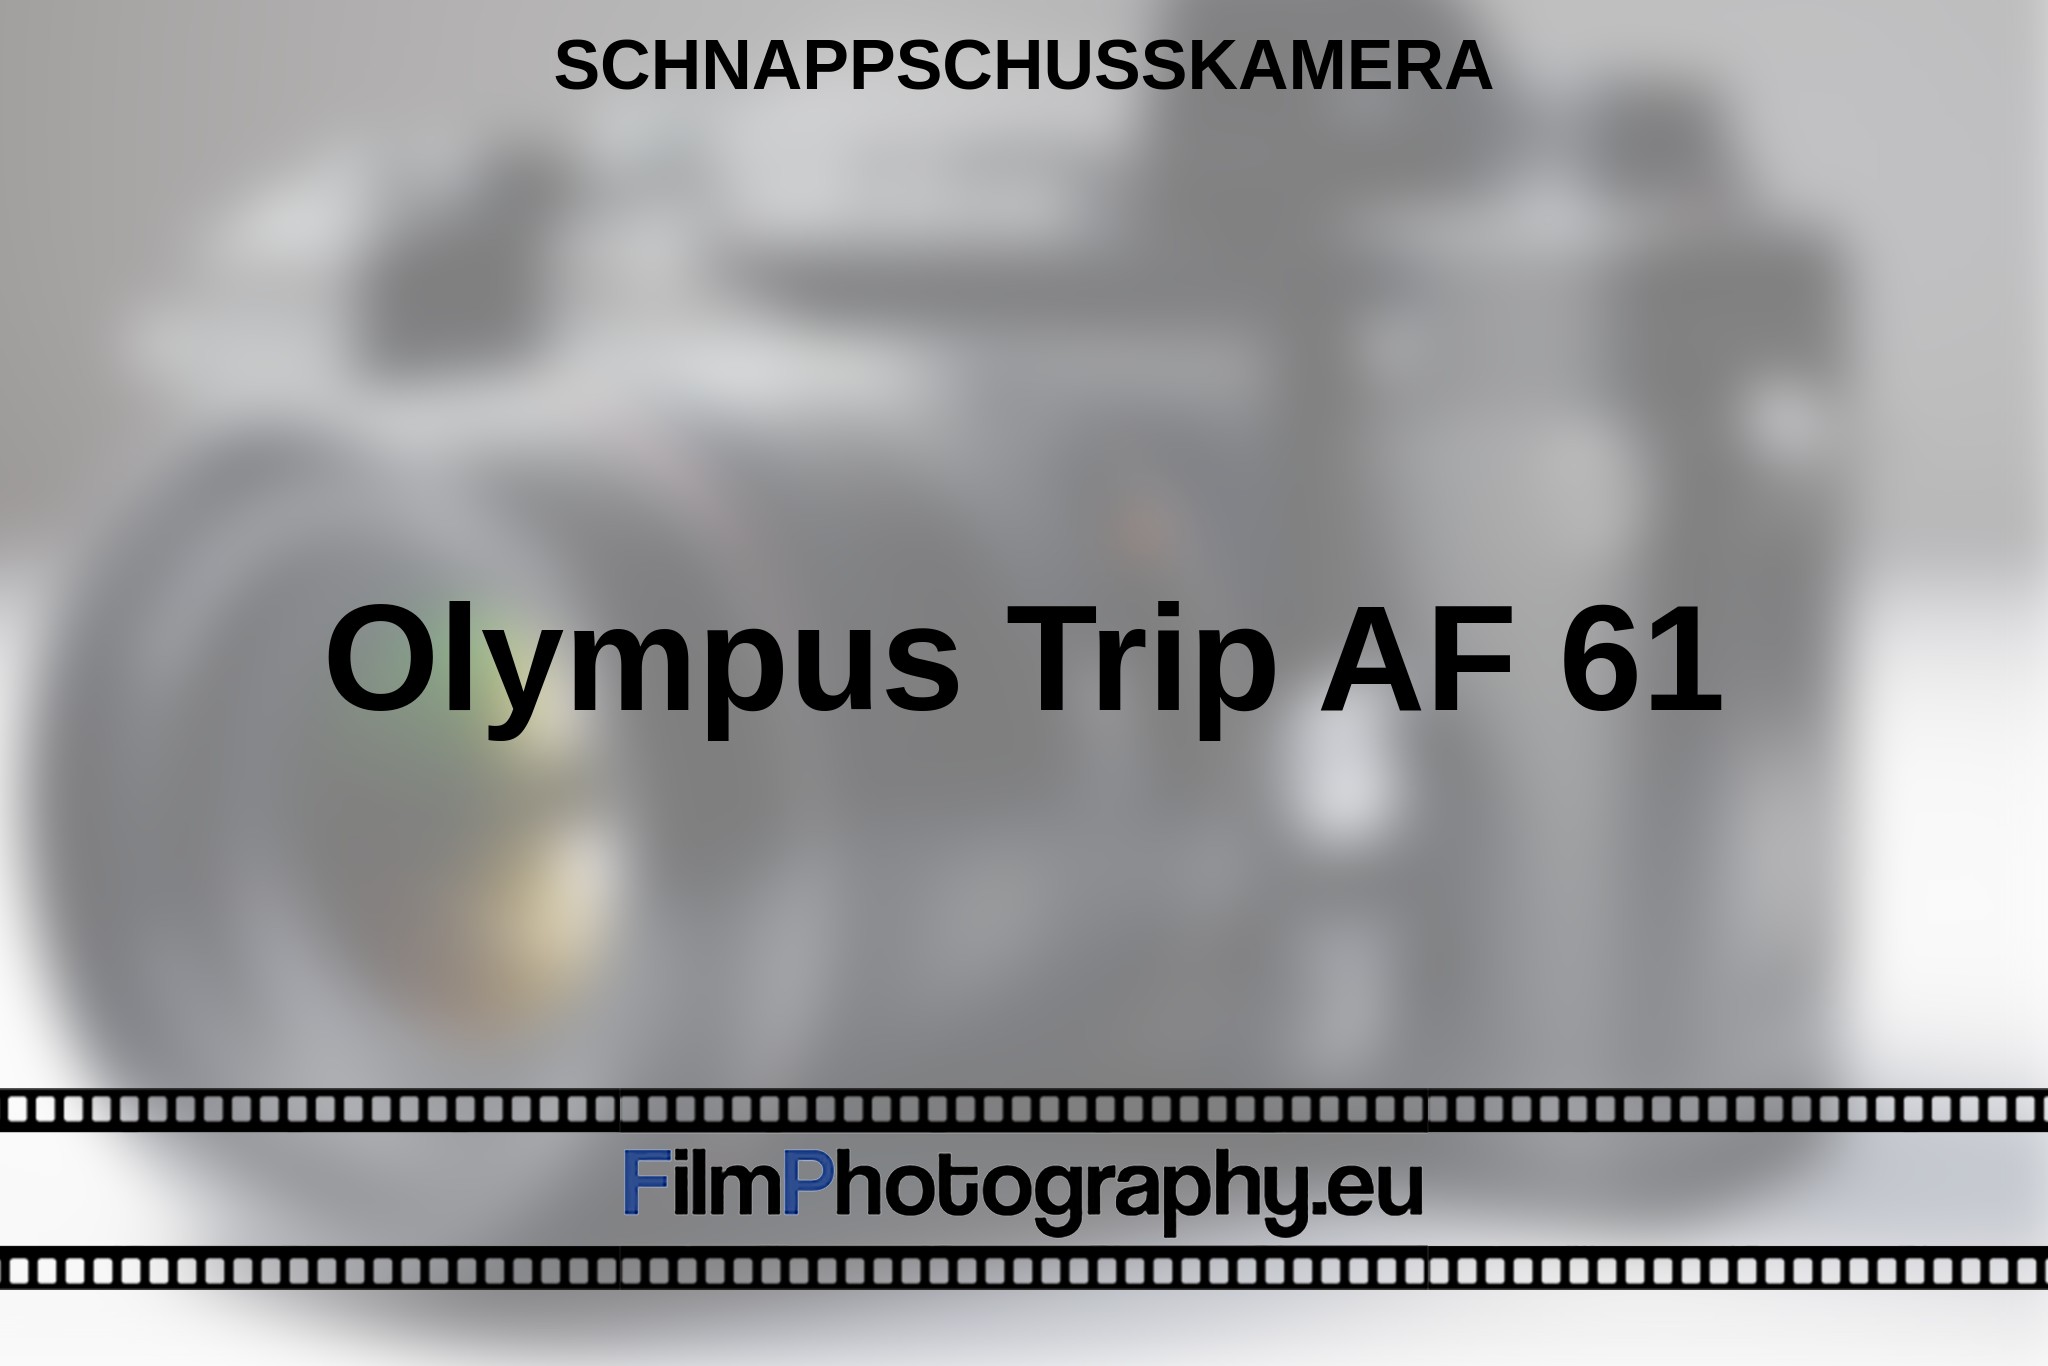 olympus-trip-af-61-schnappschusskamera-bnv.jpg